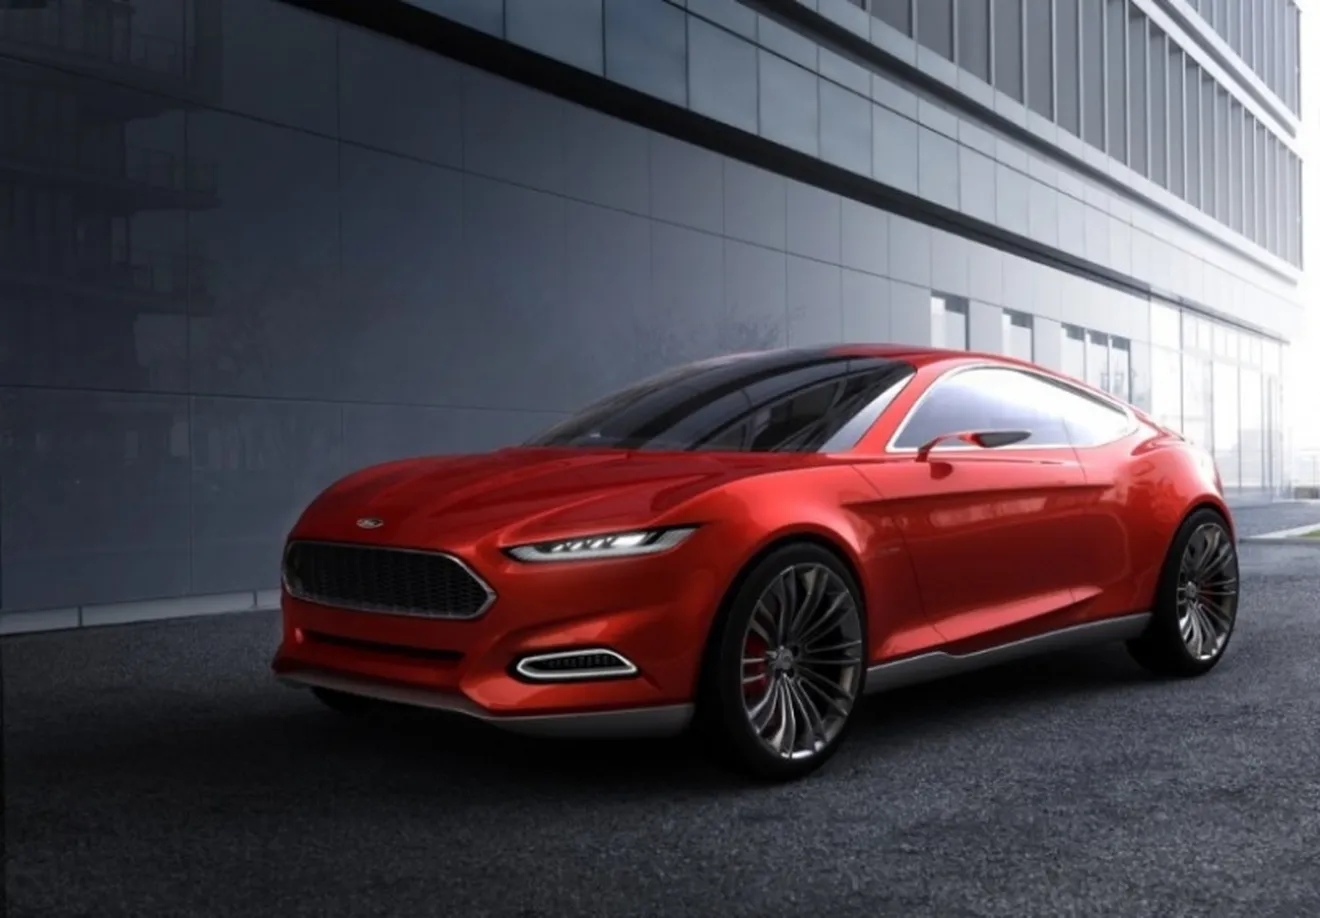 Ford Mustang 2015: prototipos cazados en video